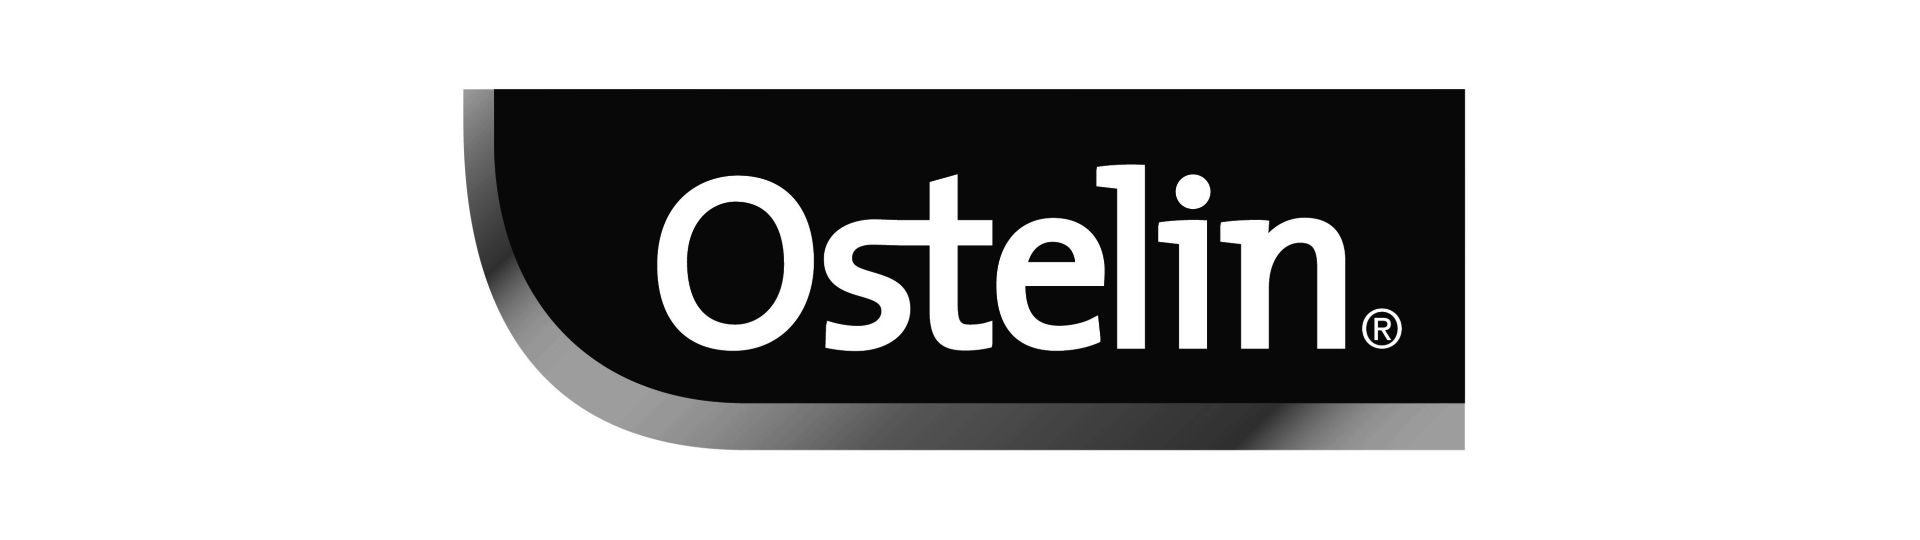 Ostelin logo black